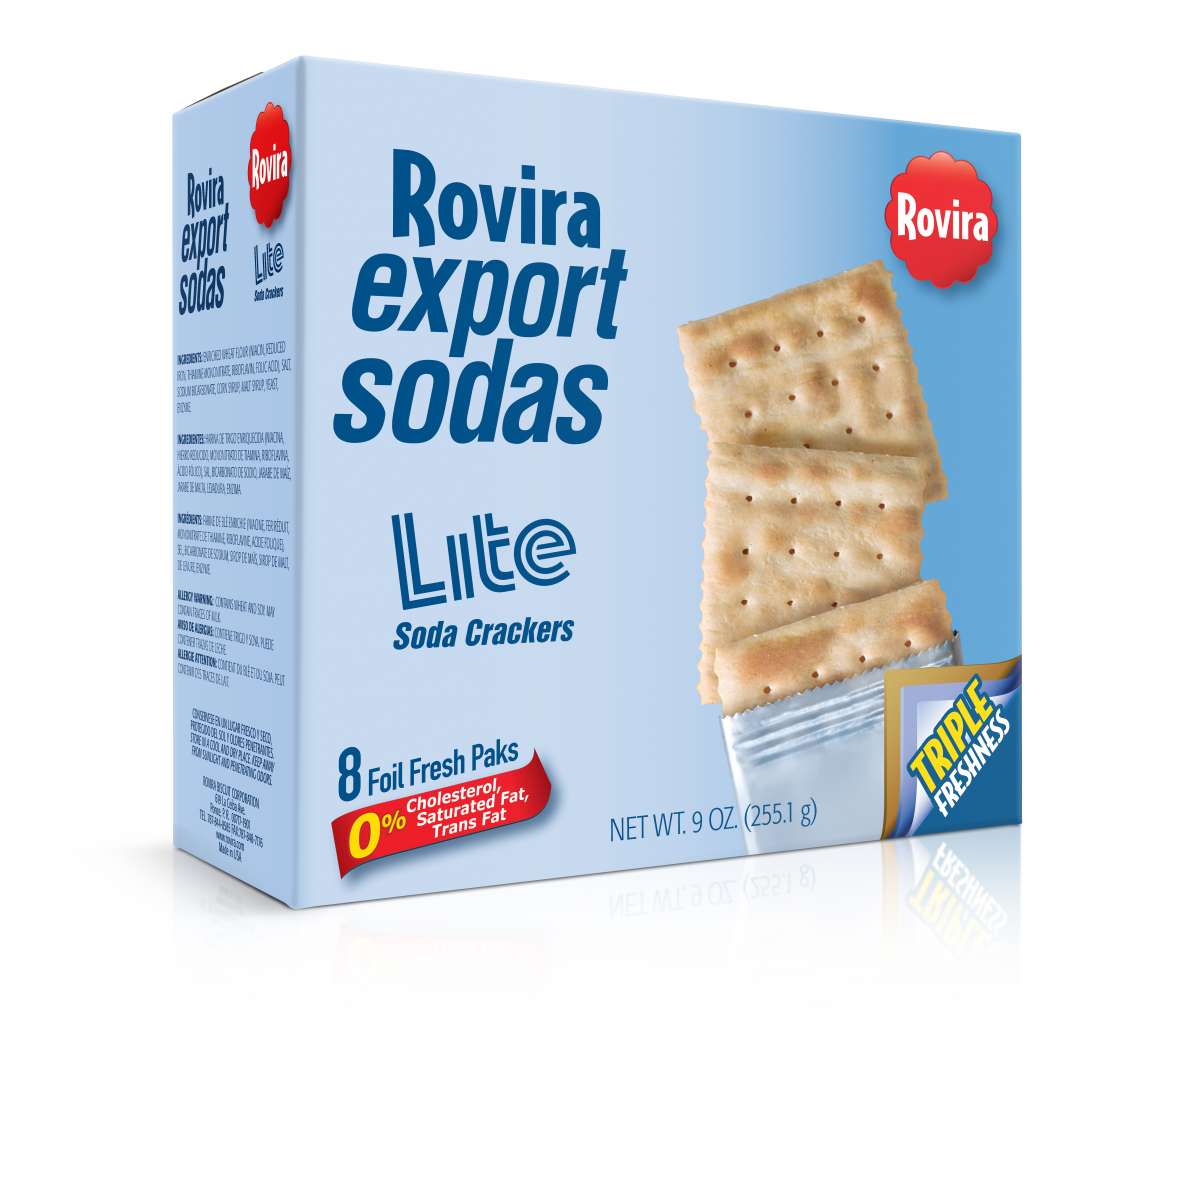 Rovira - Rovira Export Sodas (Lite)